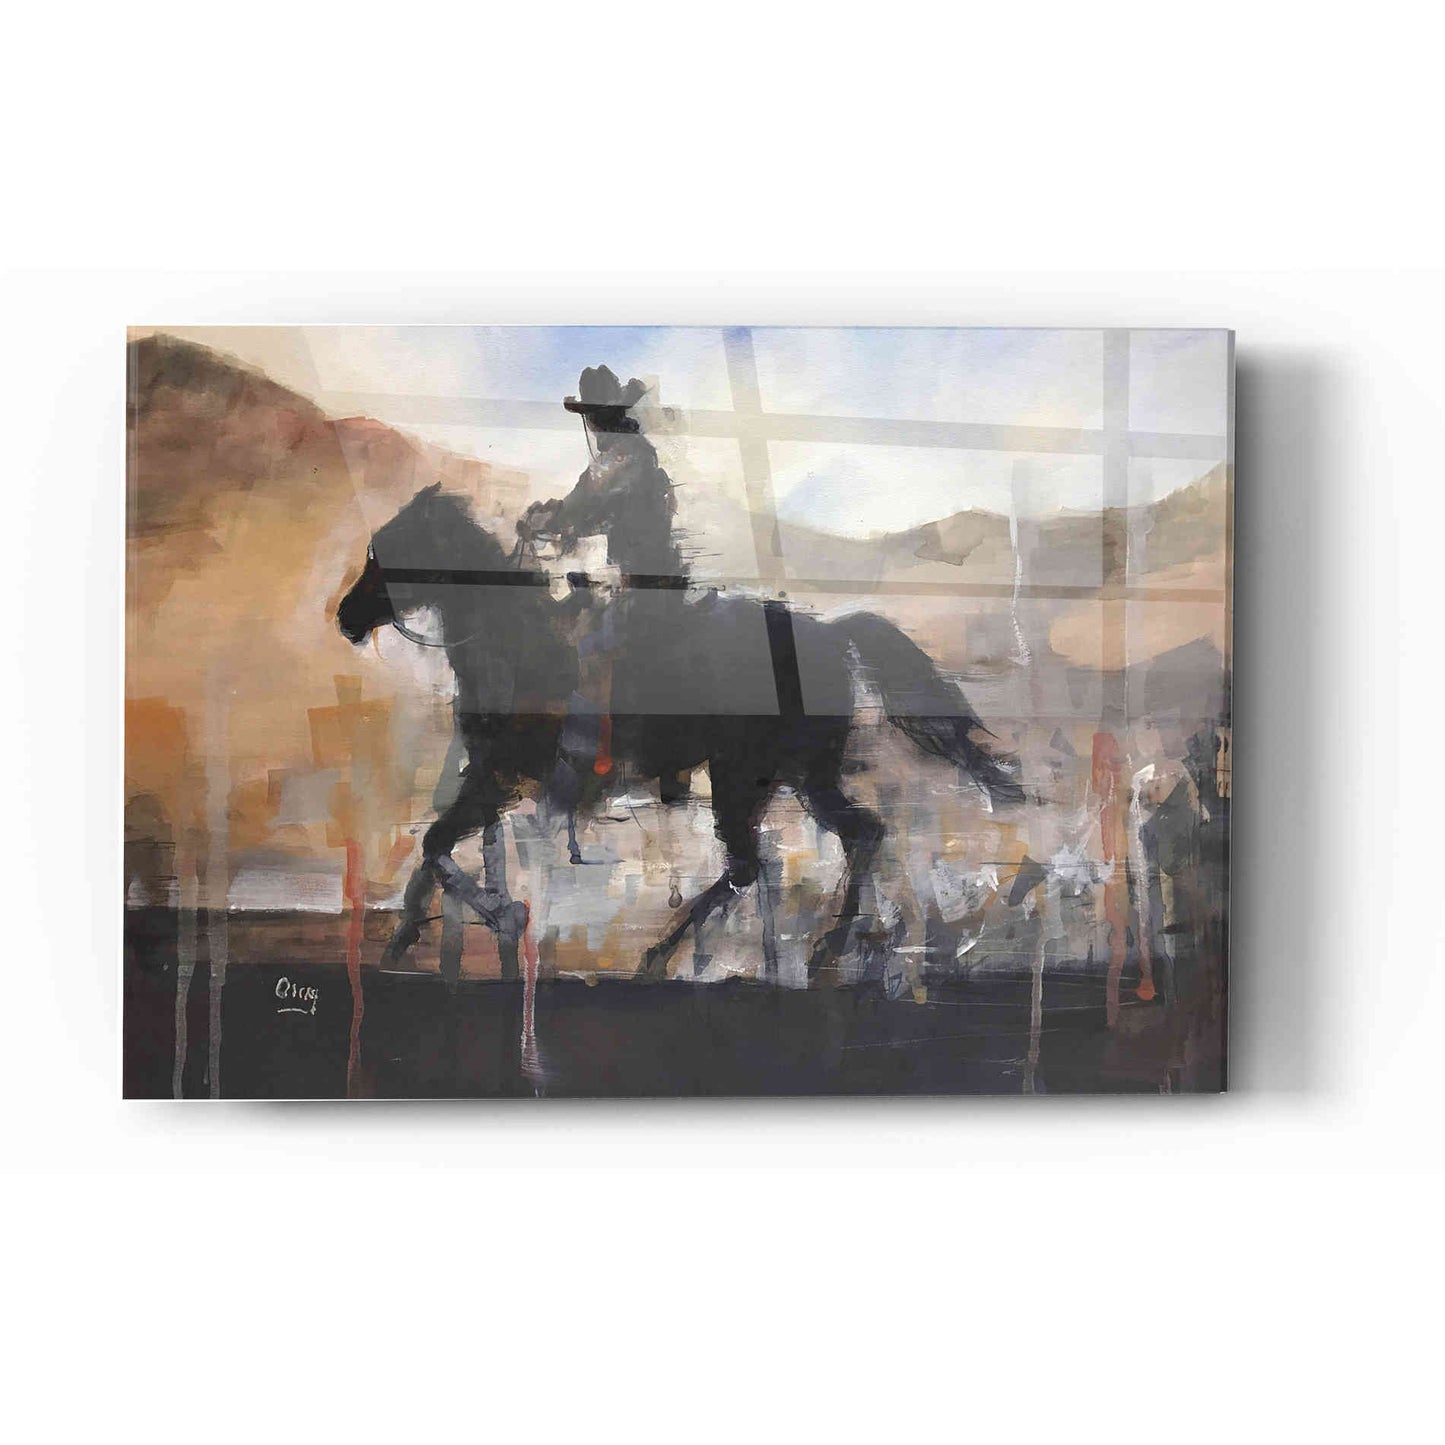 Epic Art 'The Chase' by Oscar Alvarez Pardo, Acrylic Glass Wall Art,16x24